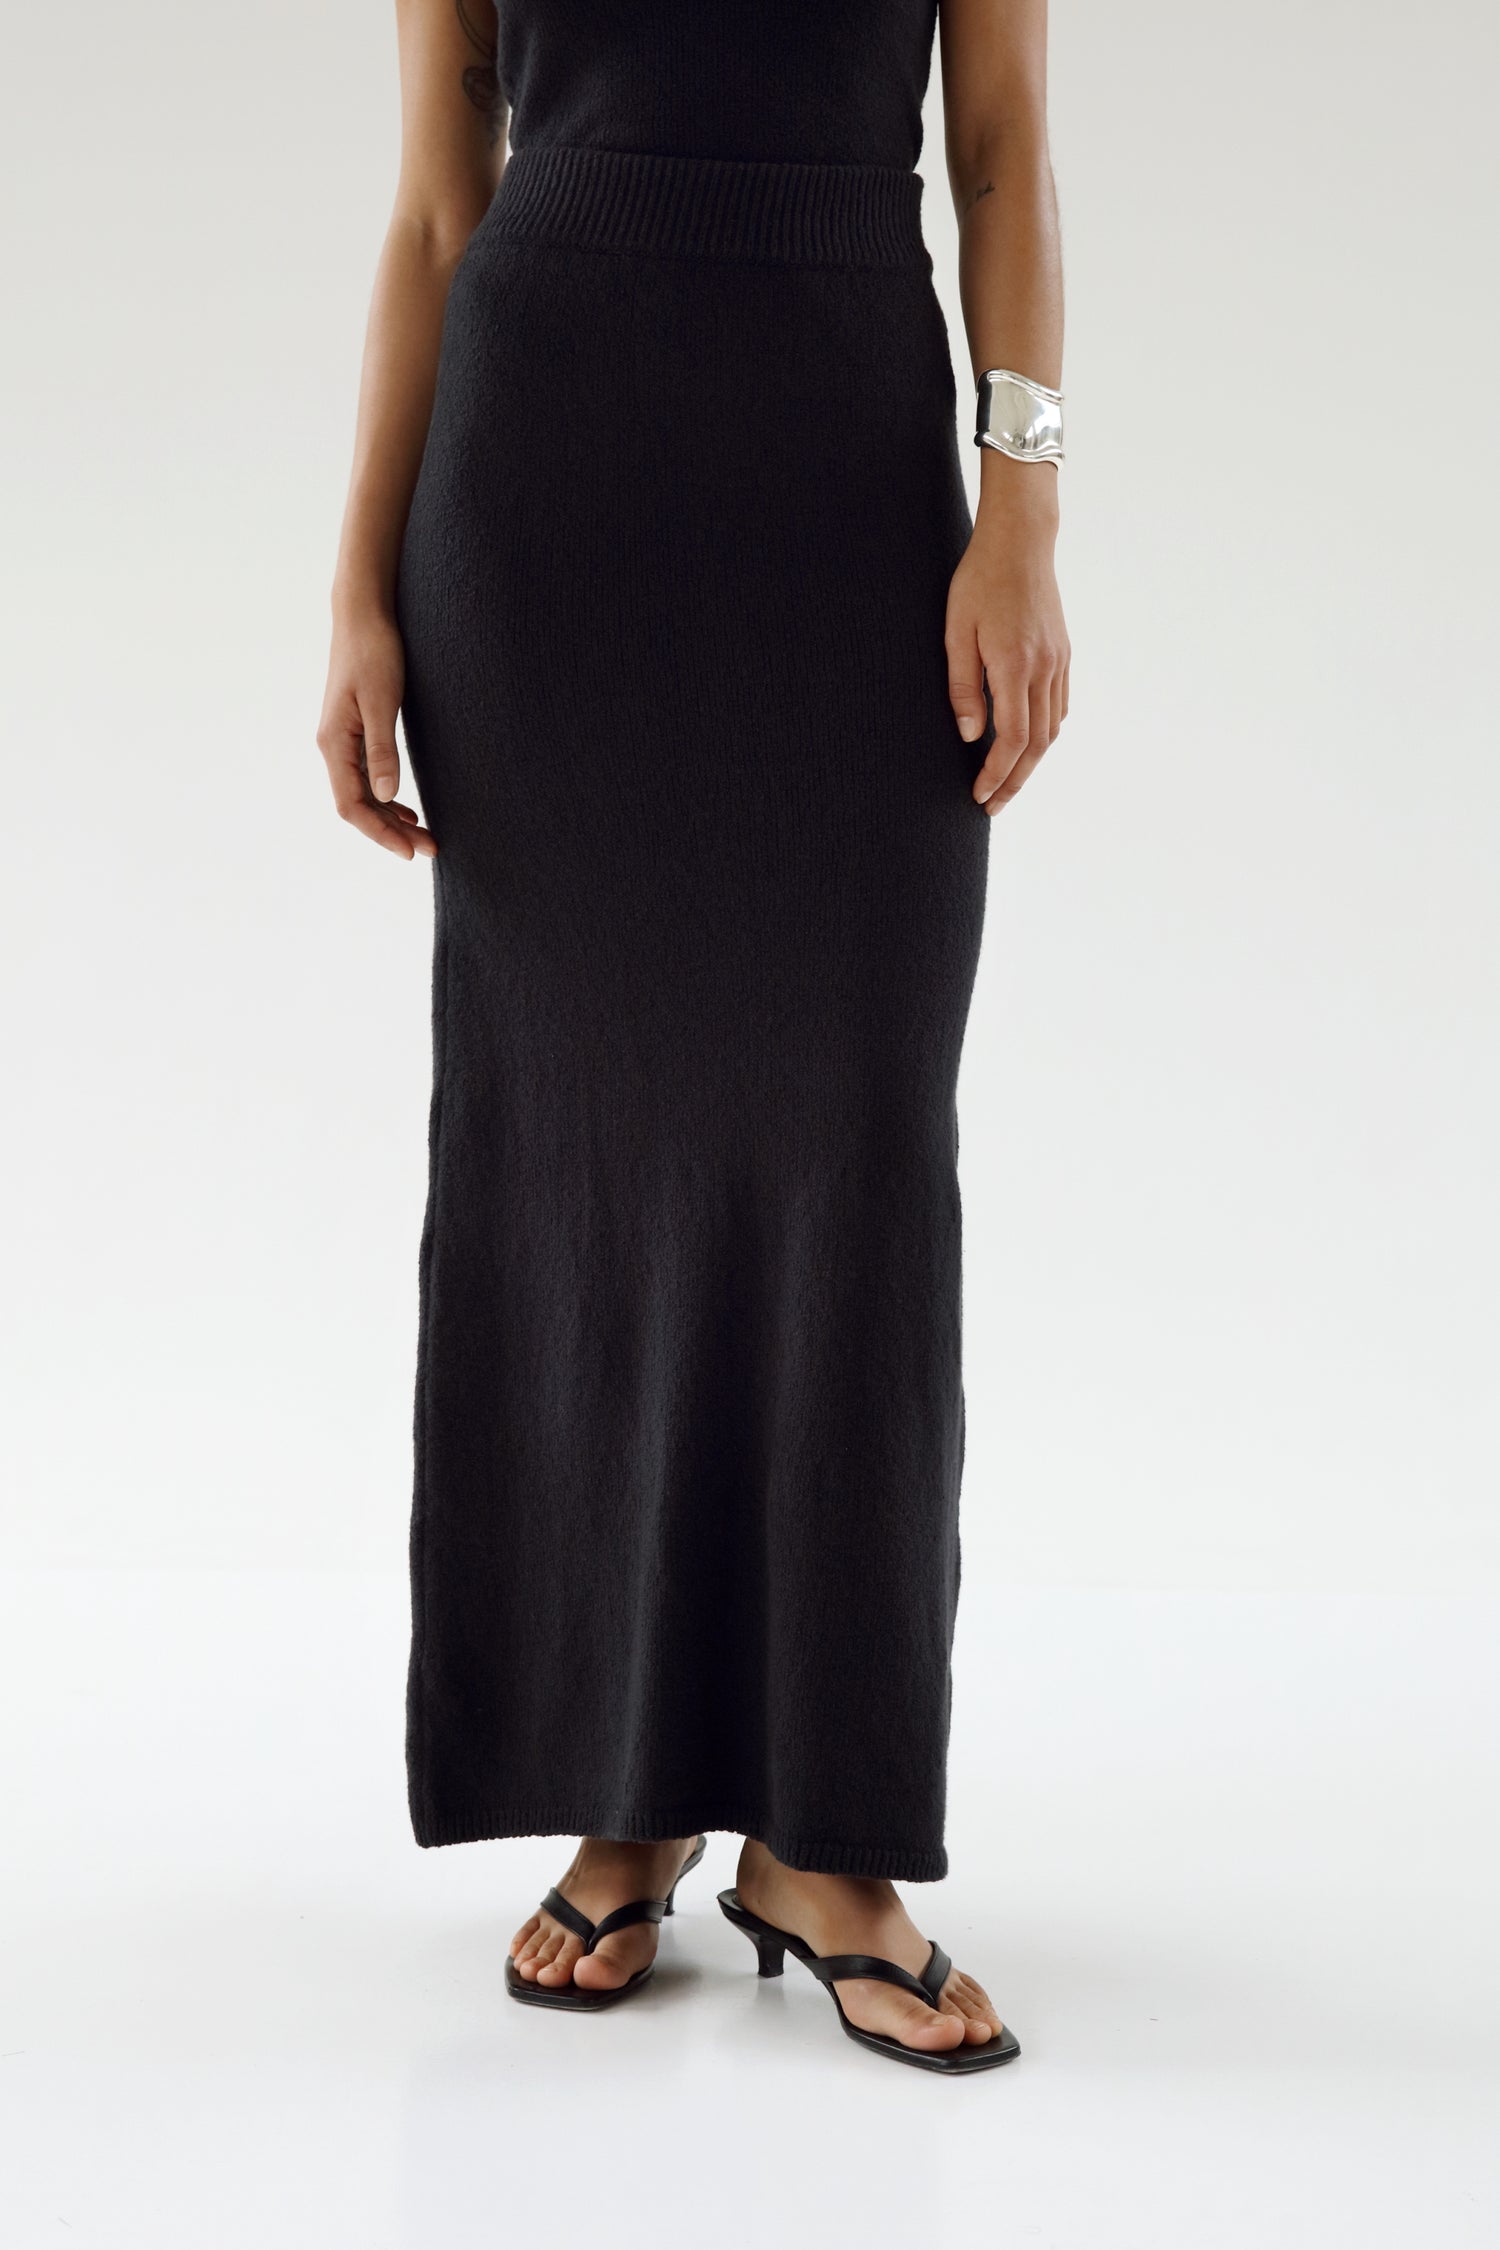 Umi Maxi Skirt, black